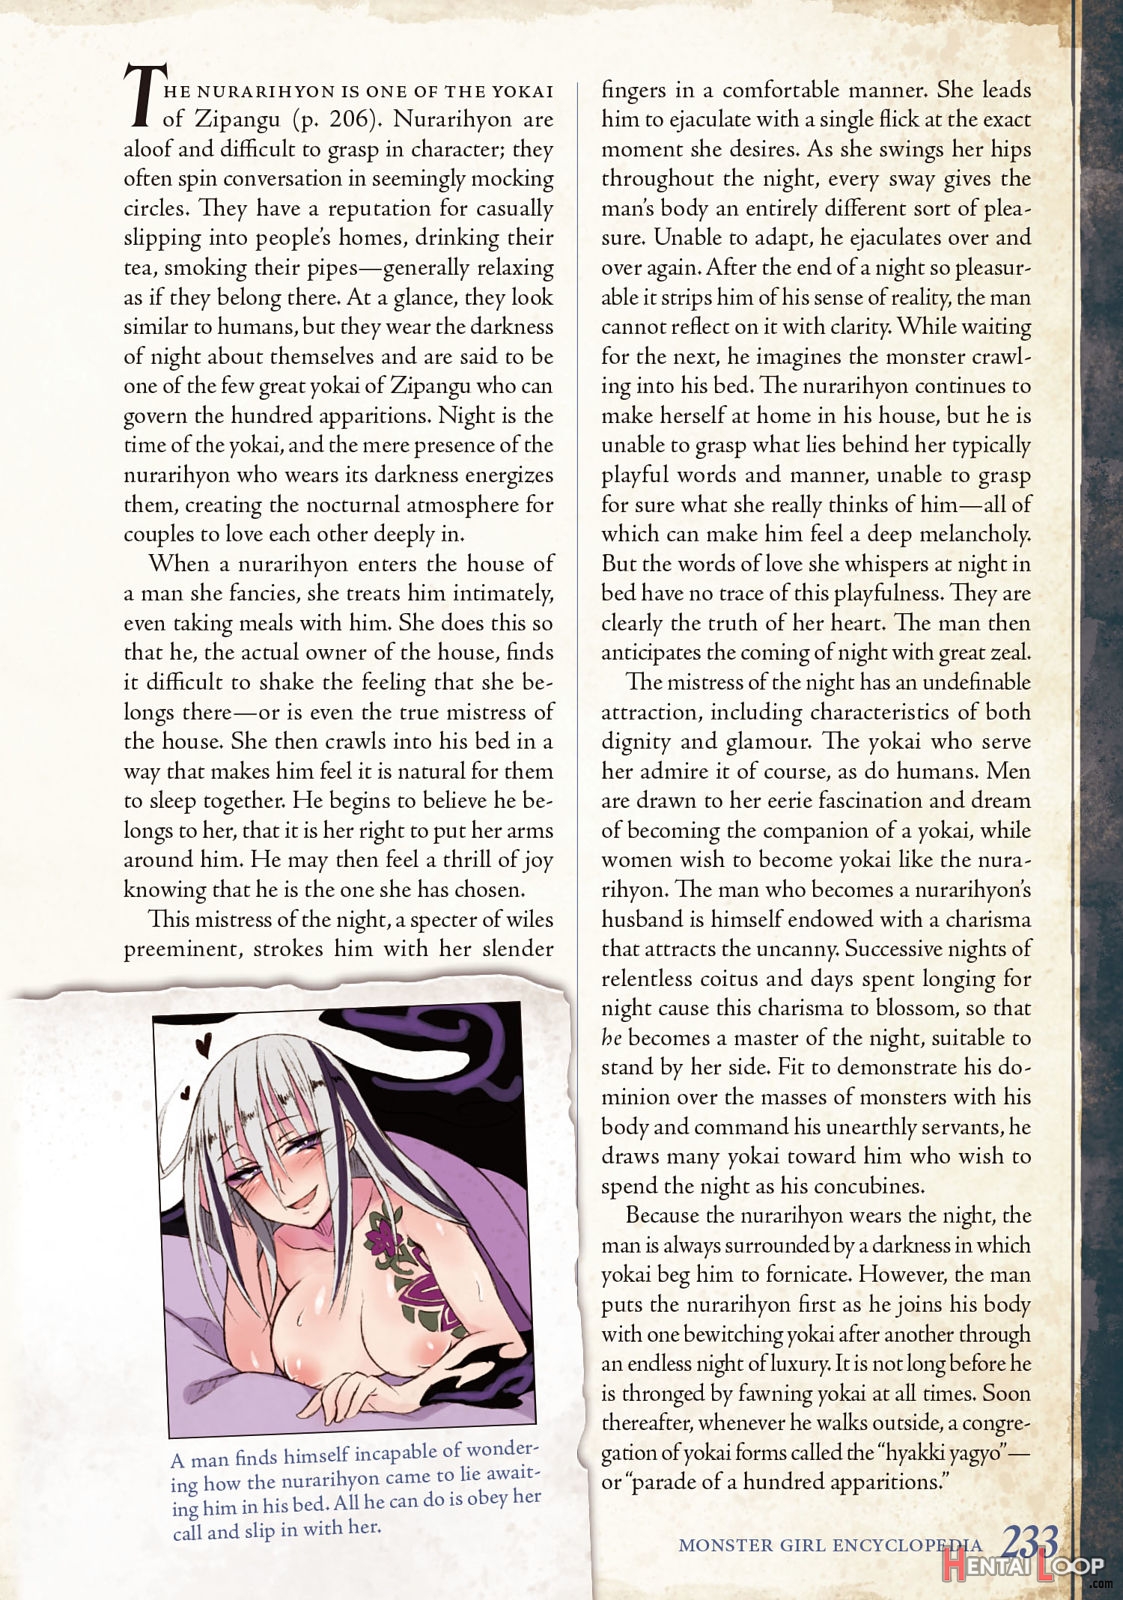 Monster Girl Encyclopedia Vol. 2 page 234